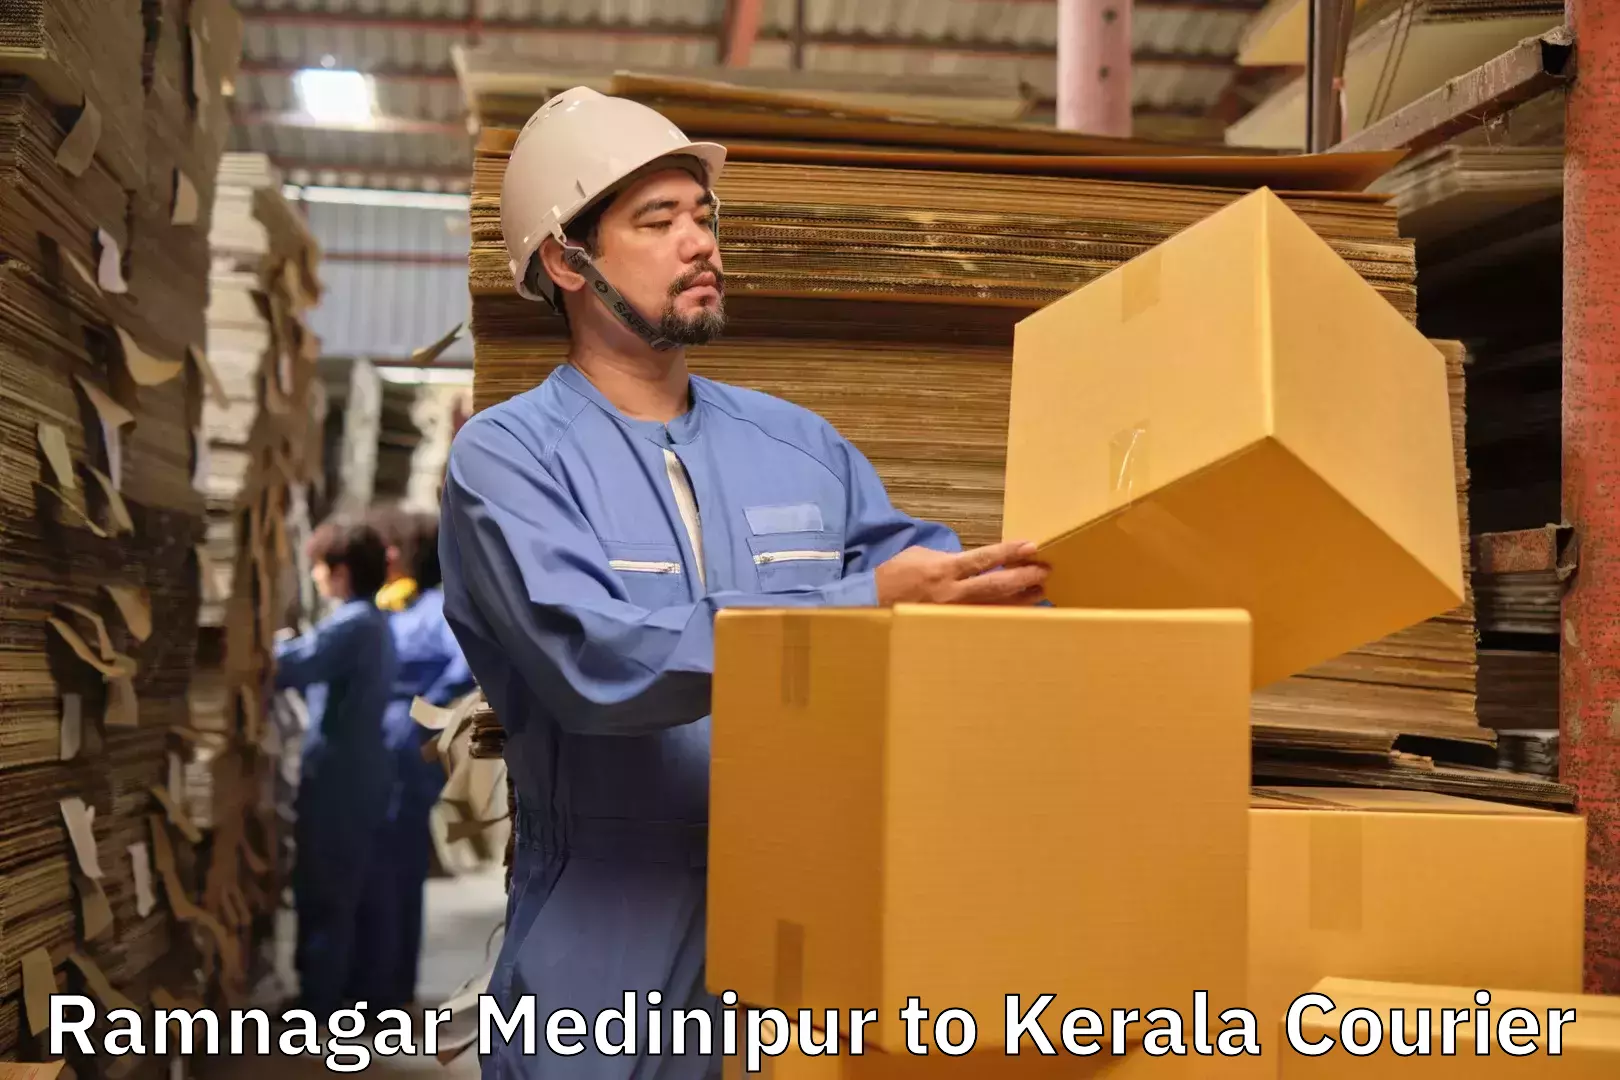 Baggage relocation service Ramnagar Medinipur to Karunagappally